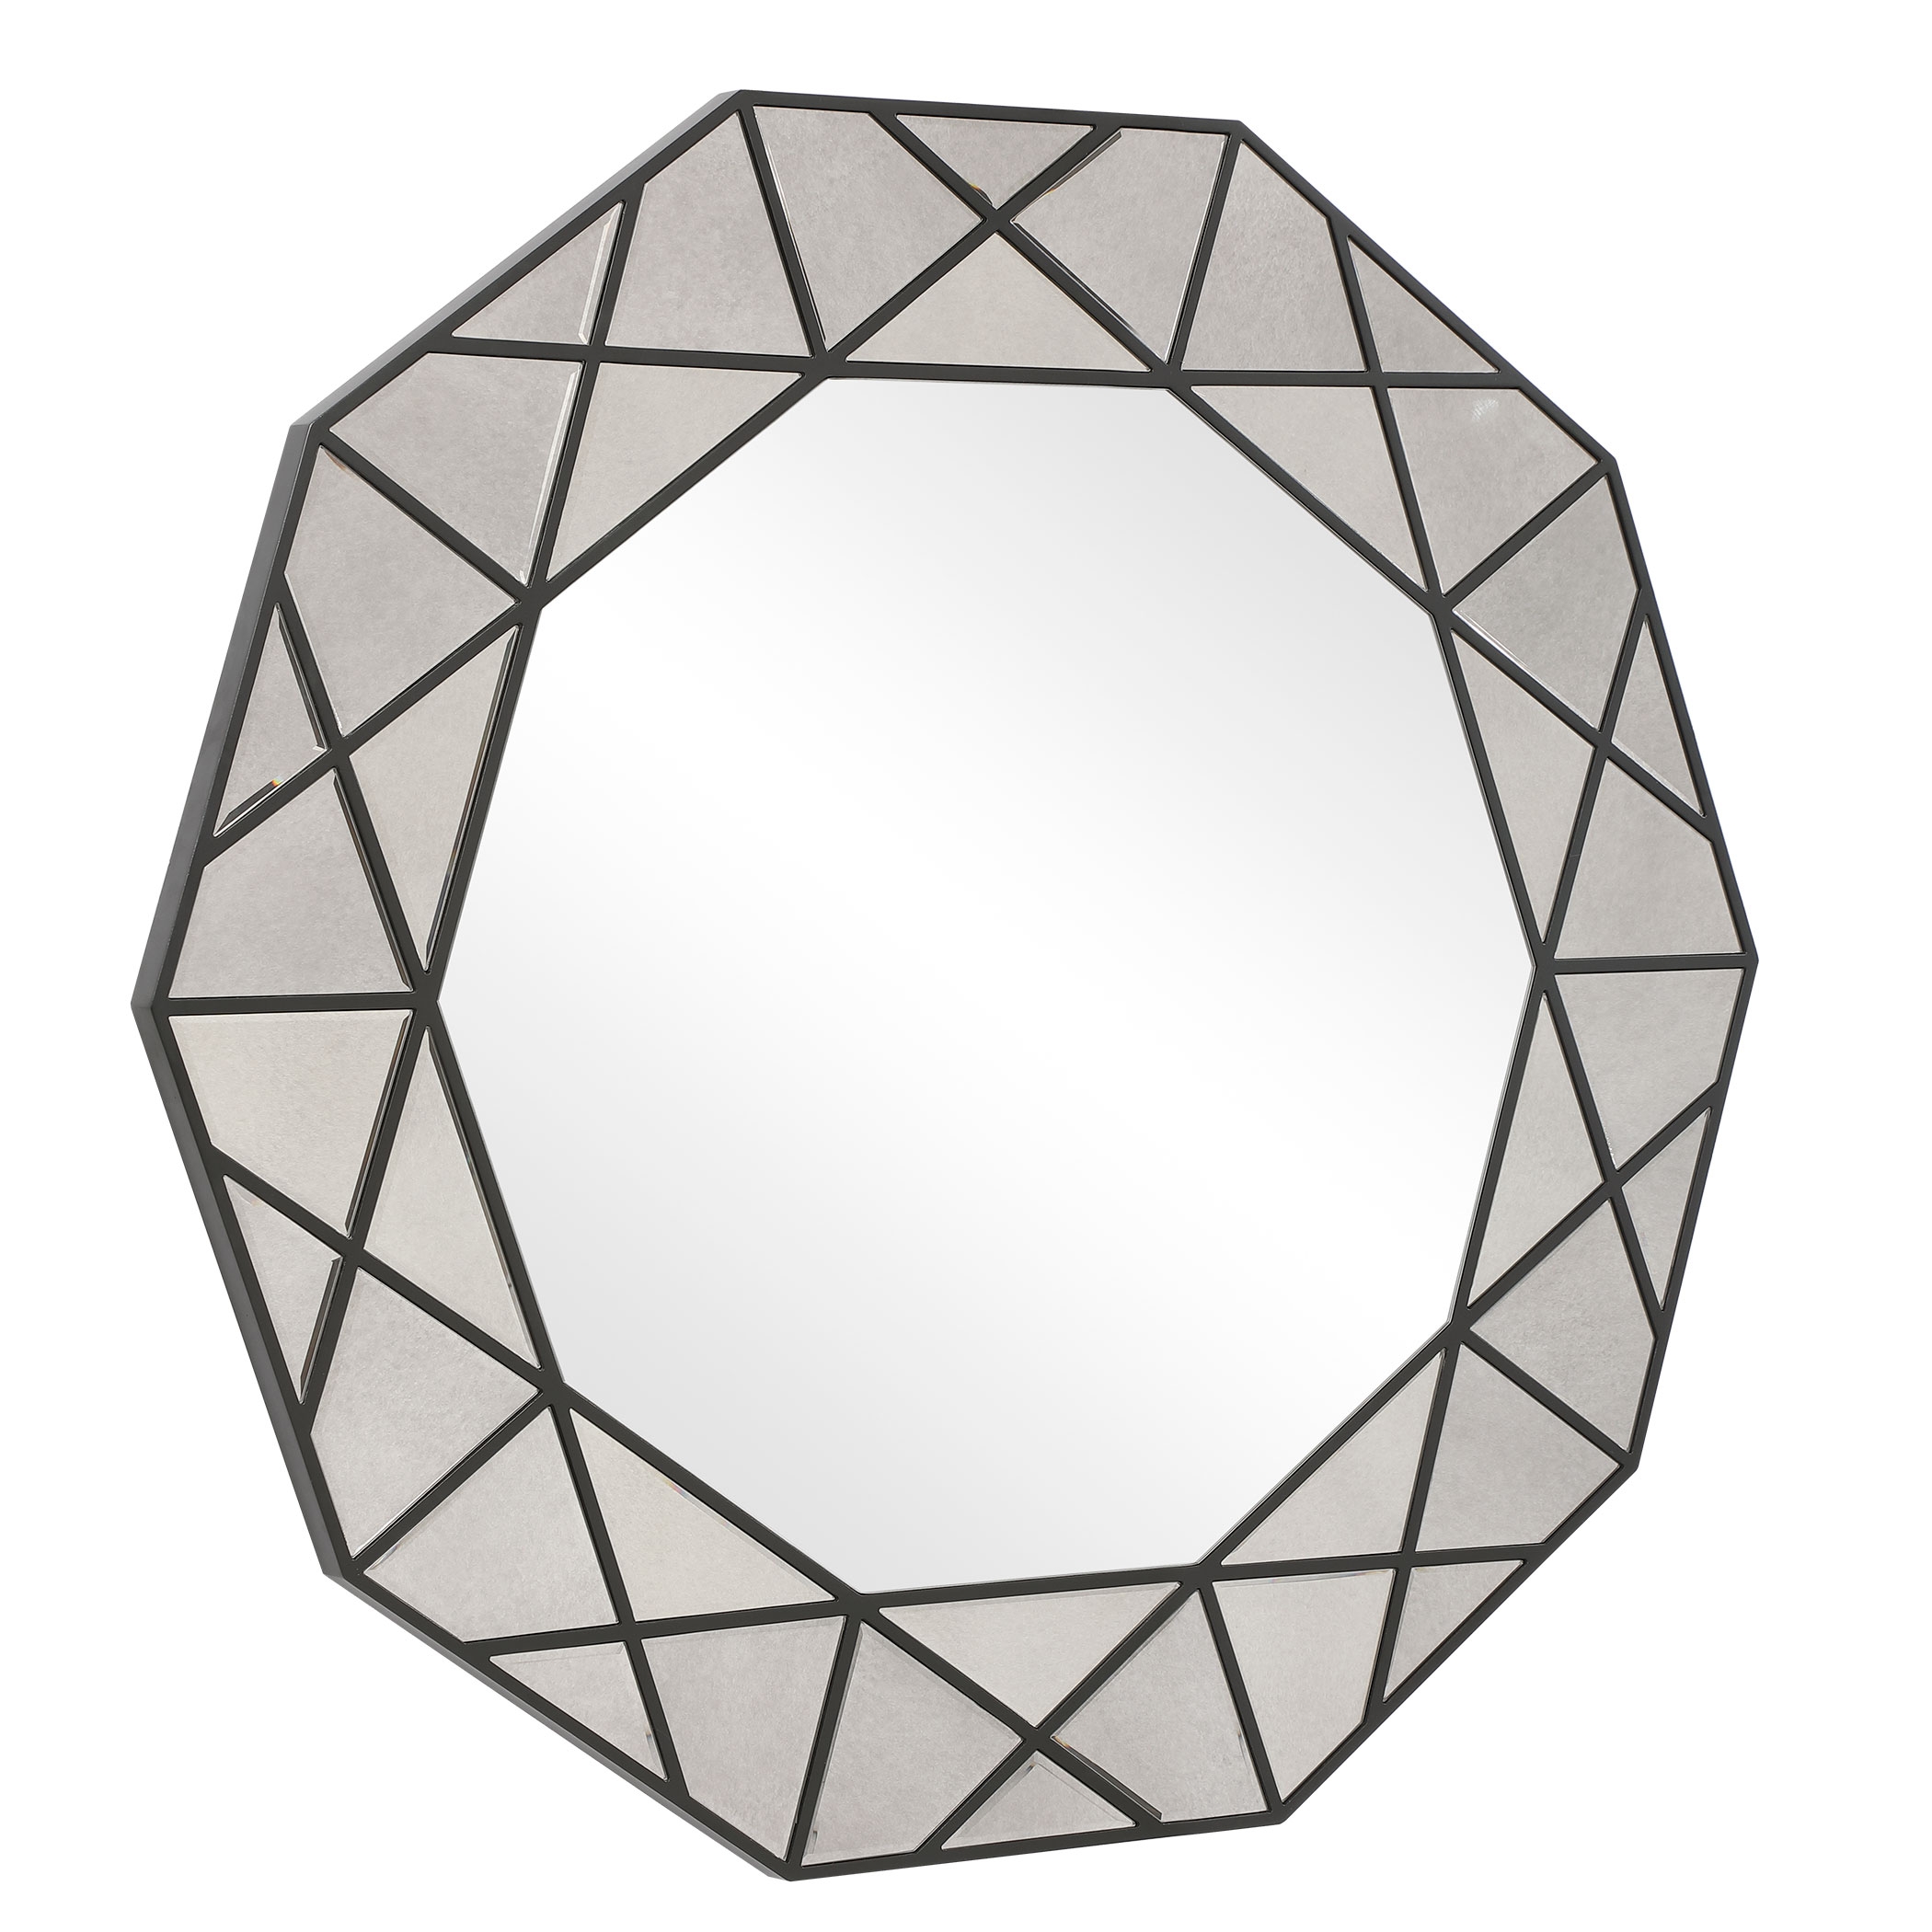 Manarola Decagon Shaped Mirror - Image 2